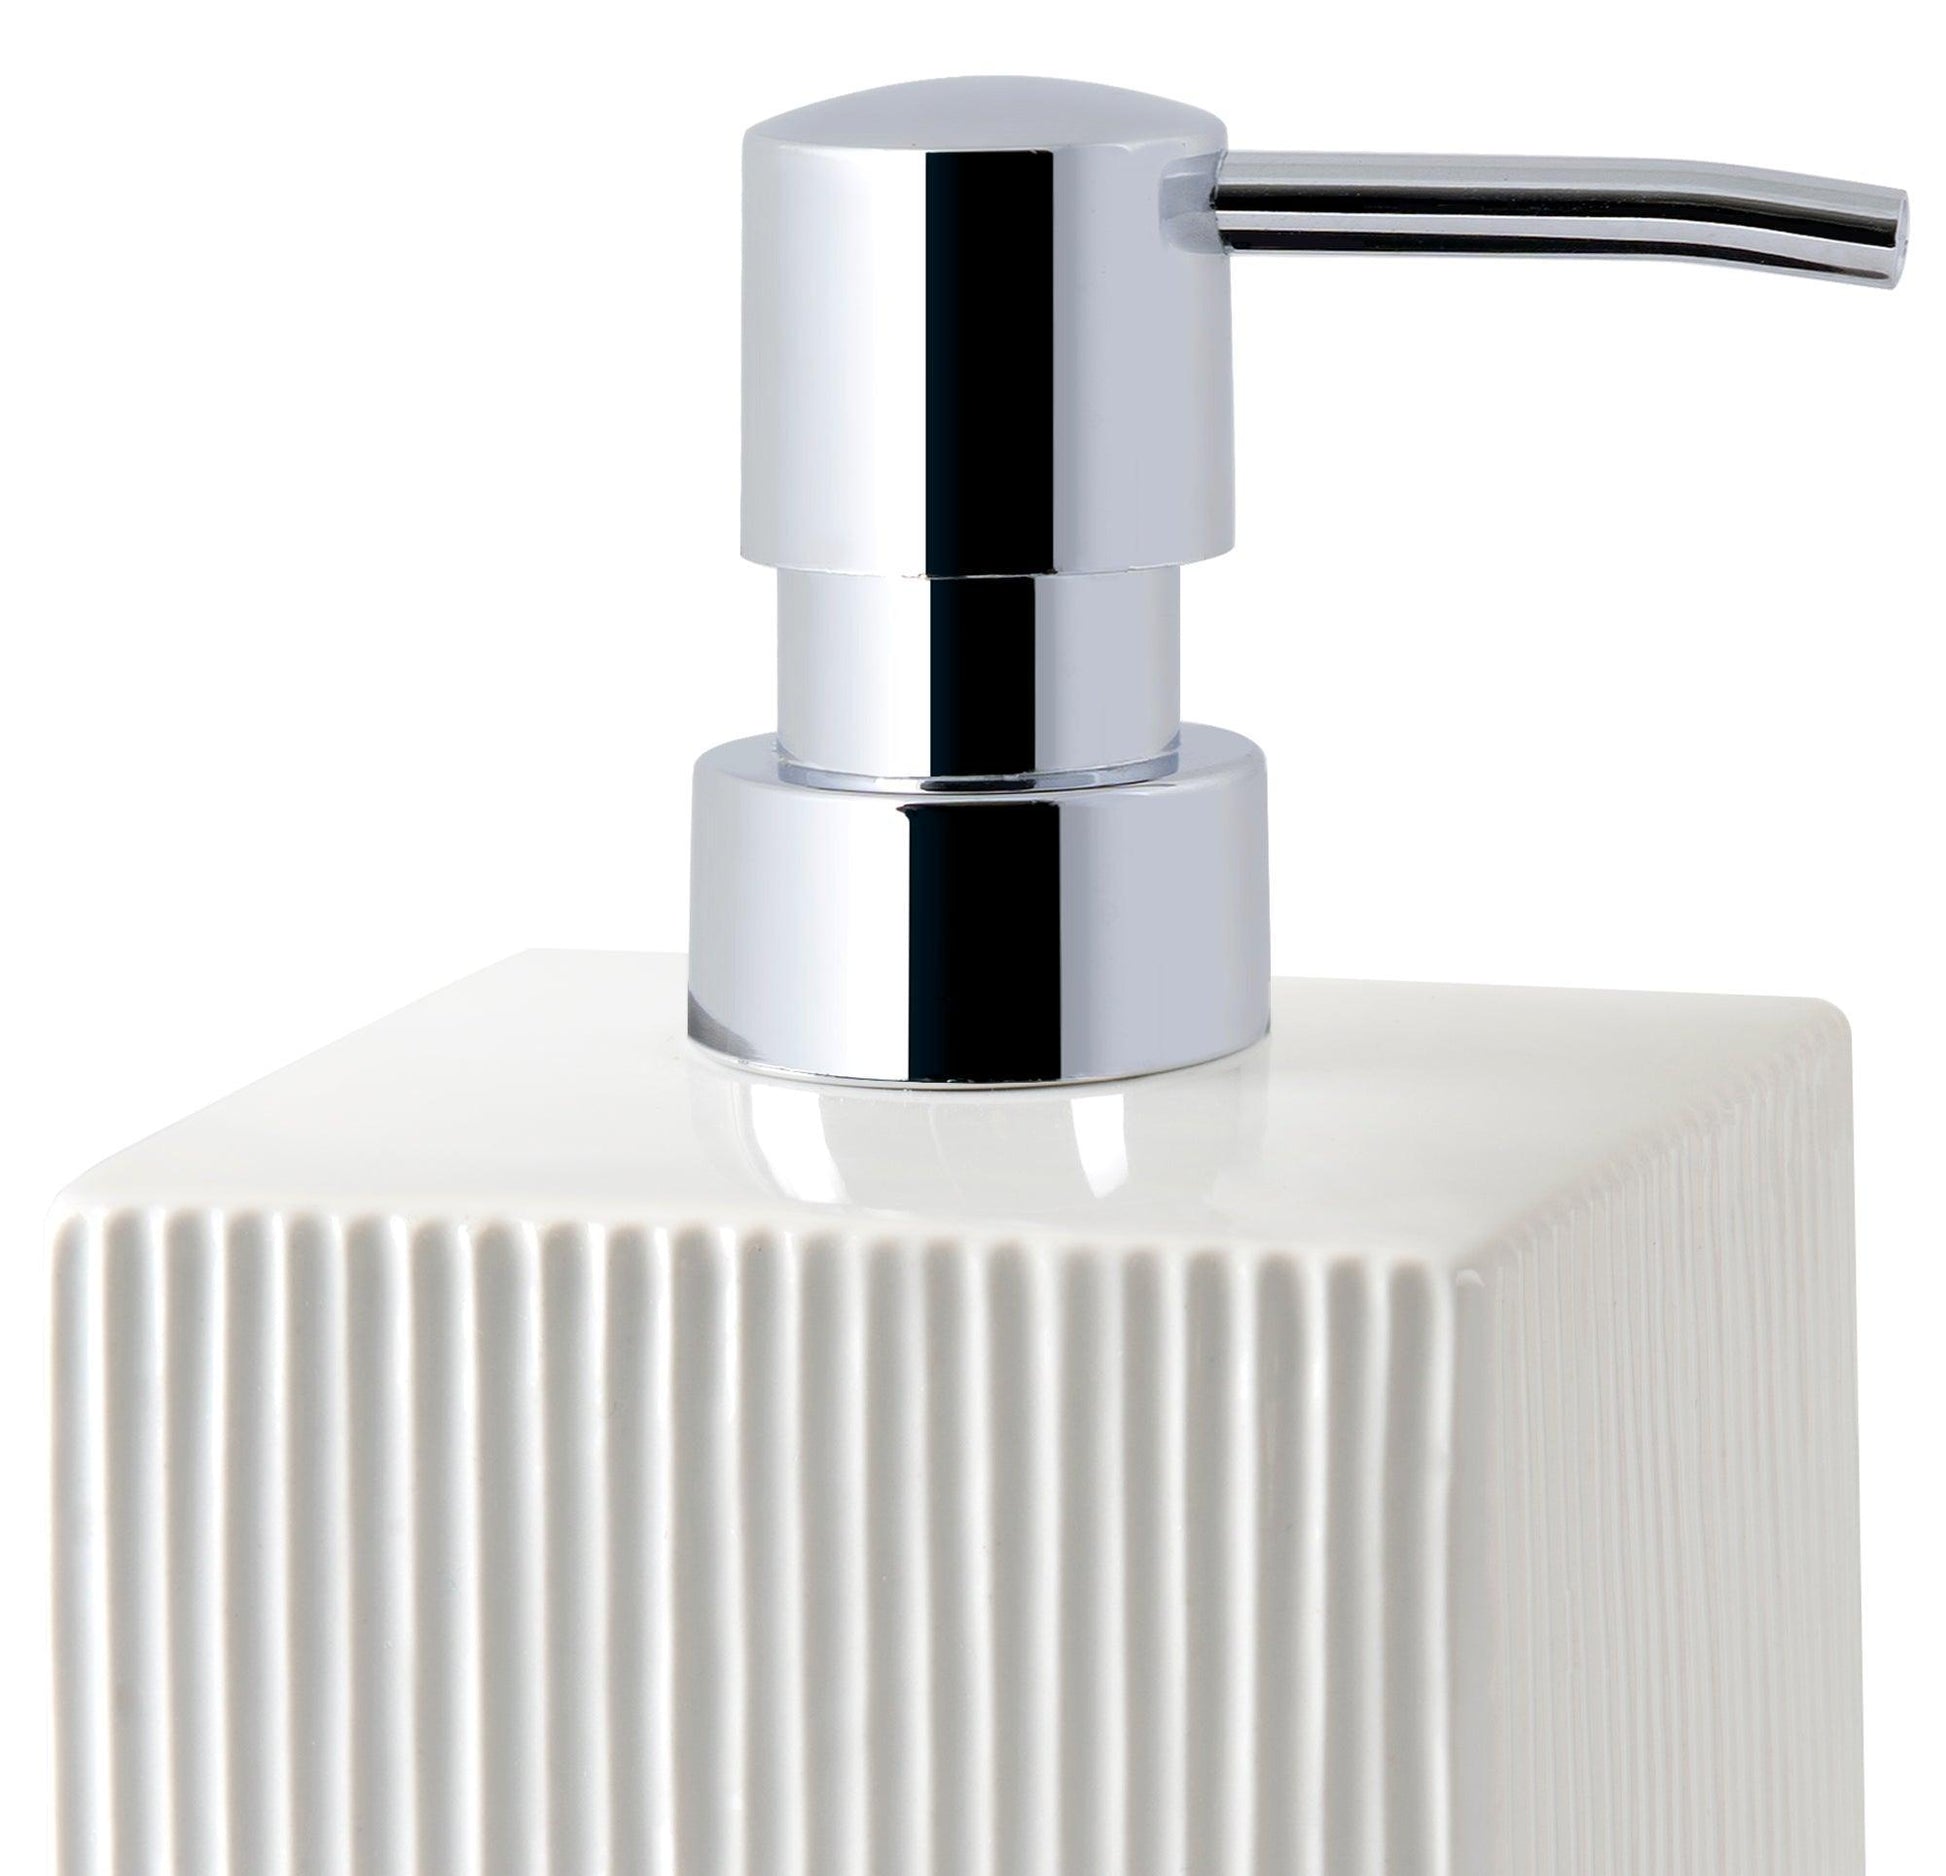 Hotelier Lotion/Soap Dispenser - Allure Home Creation